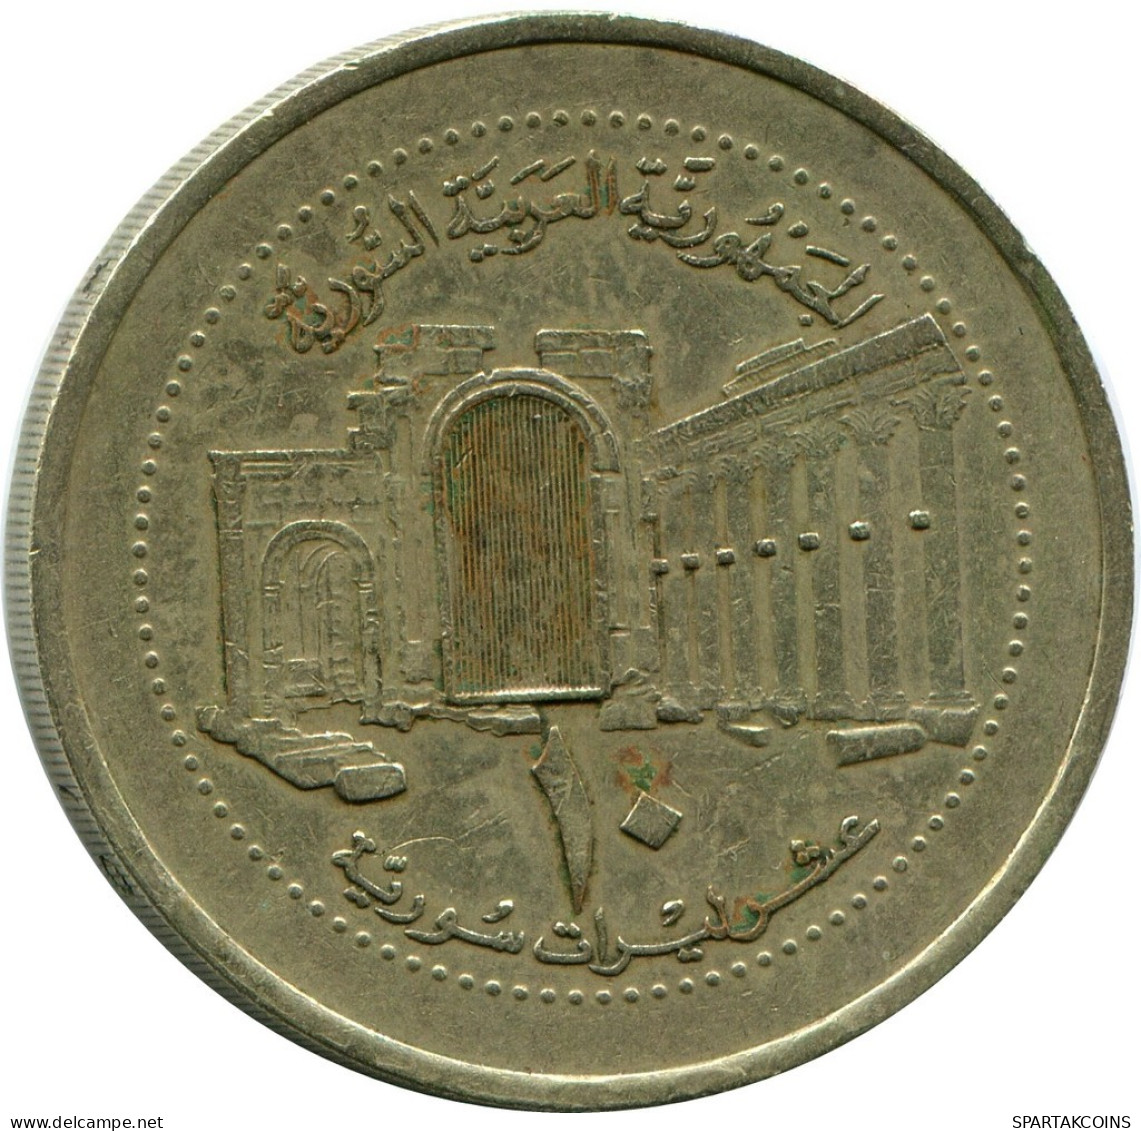 10 LIRAS / POUNDS 2003 SYRIEN SYRIA Islamisch Münze #AP566.D.D.A - Syrie